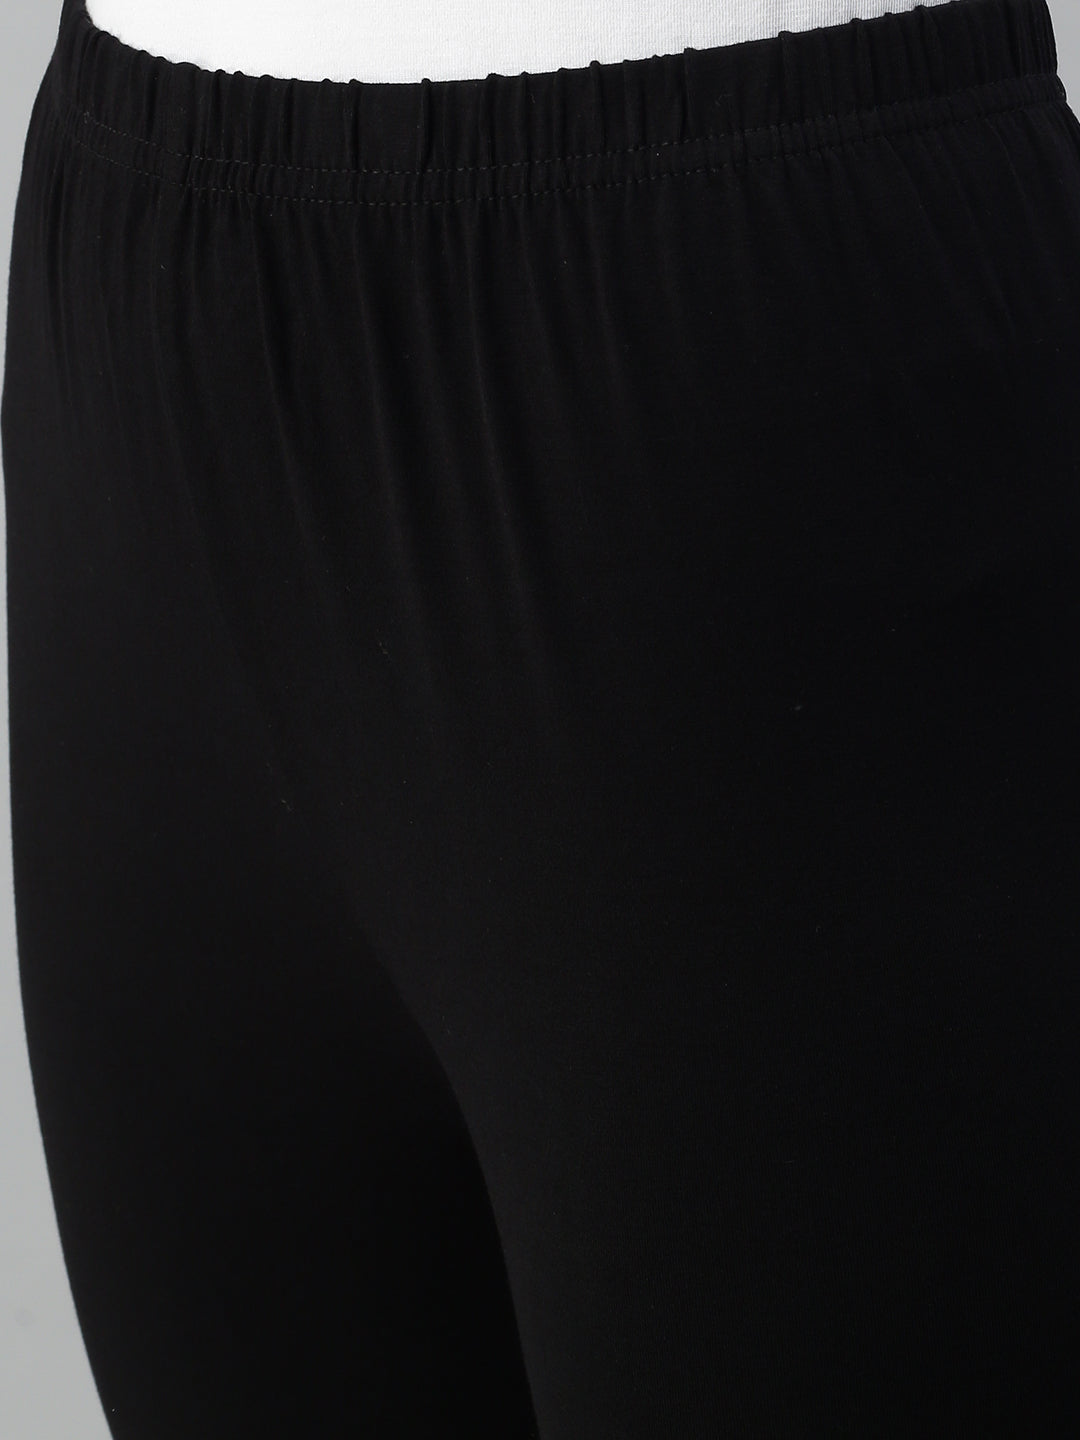 Shop Prisma's Black Cuff Length Leggings for Ultimate Comfort